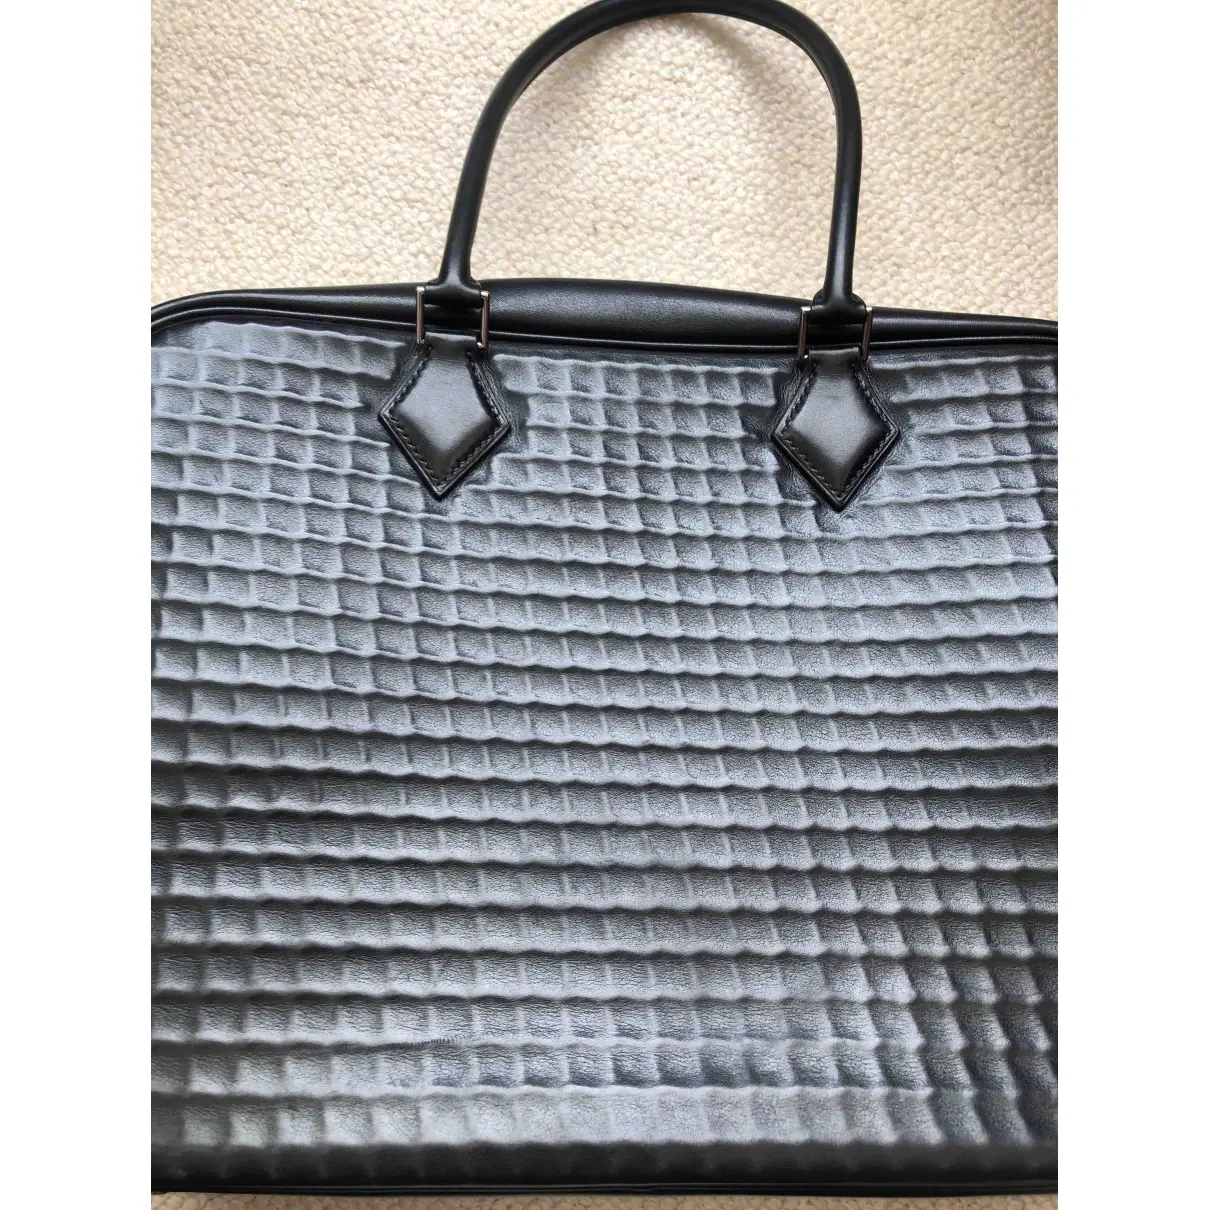 Buy Hermès Plume leather handbag online - Vintage